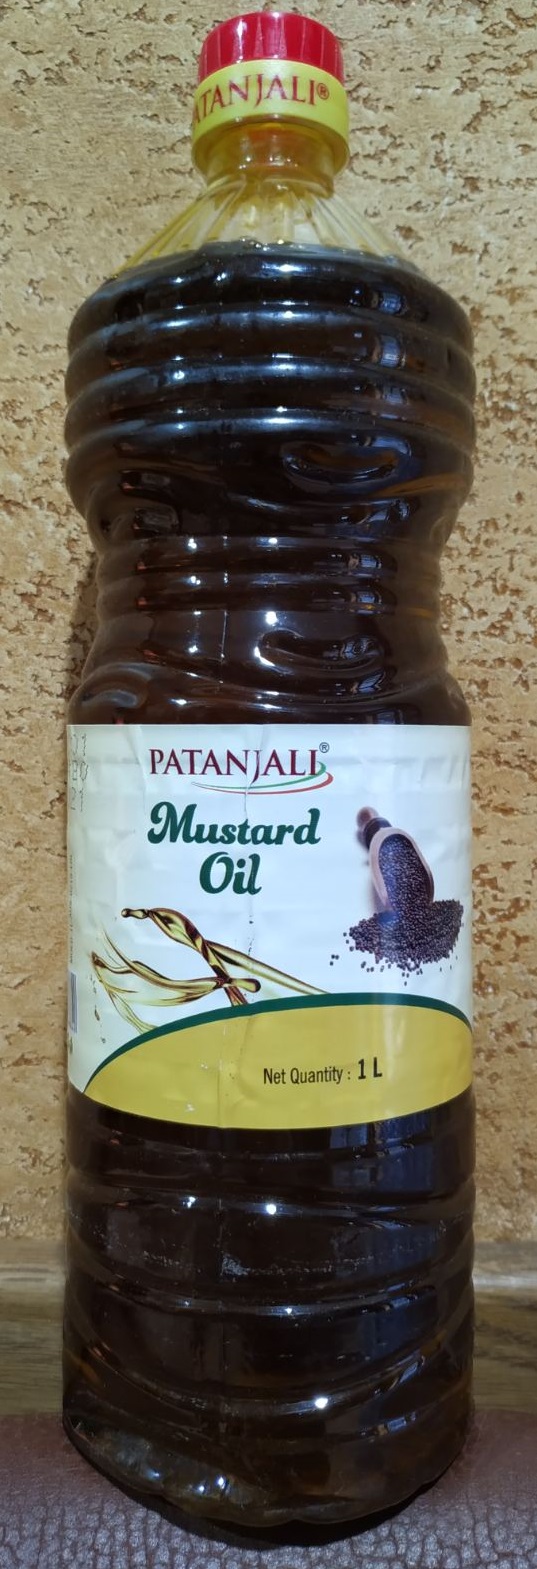 Mustard oil Patanjali Горчичное масло 1 литр Индия первый холодный отжим, масло семян желтой горчицы